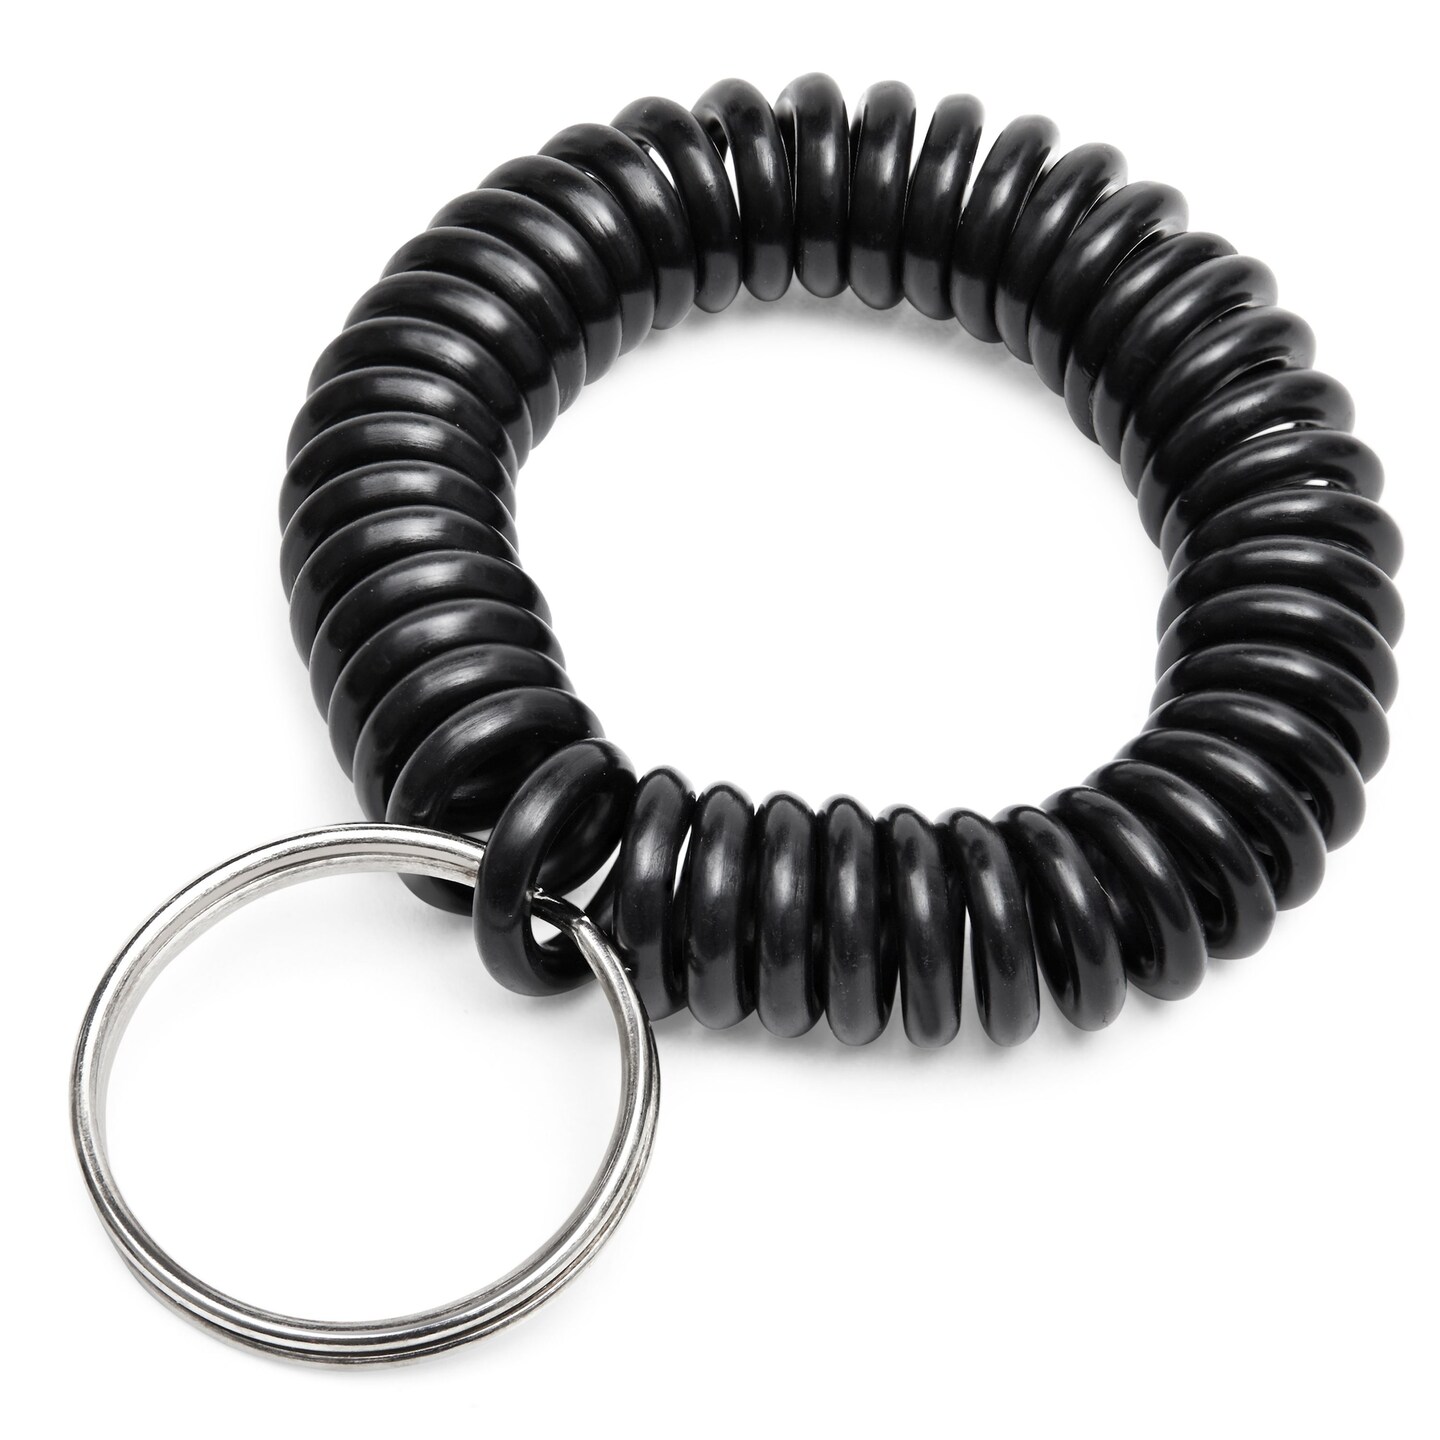 100 Pack Spiral Coil Wrist Keychains, Stretchy Wristband Bracelet Key Rings (Black)